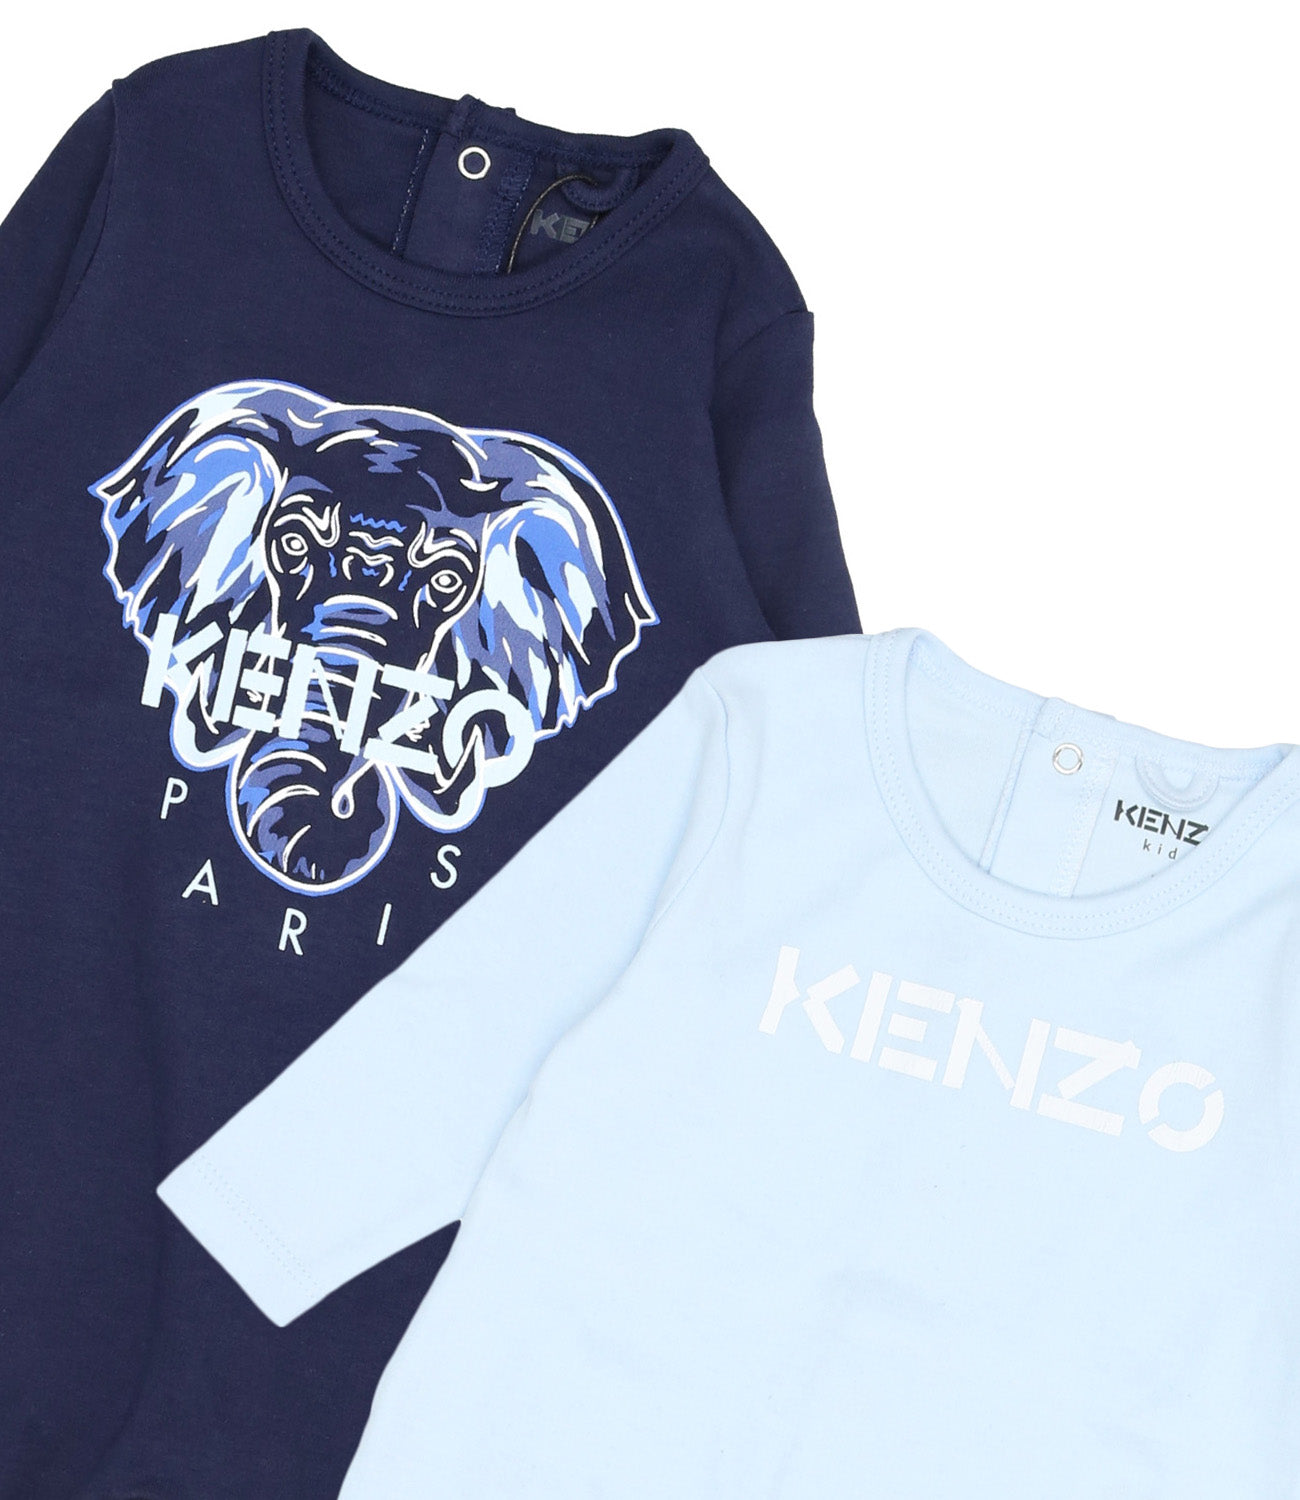 Kenzo Kids | Set of Two Blue and Light Blue Sleepsuits